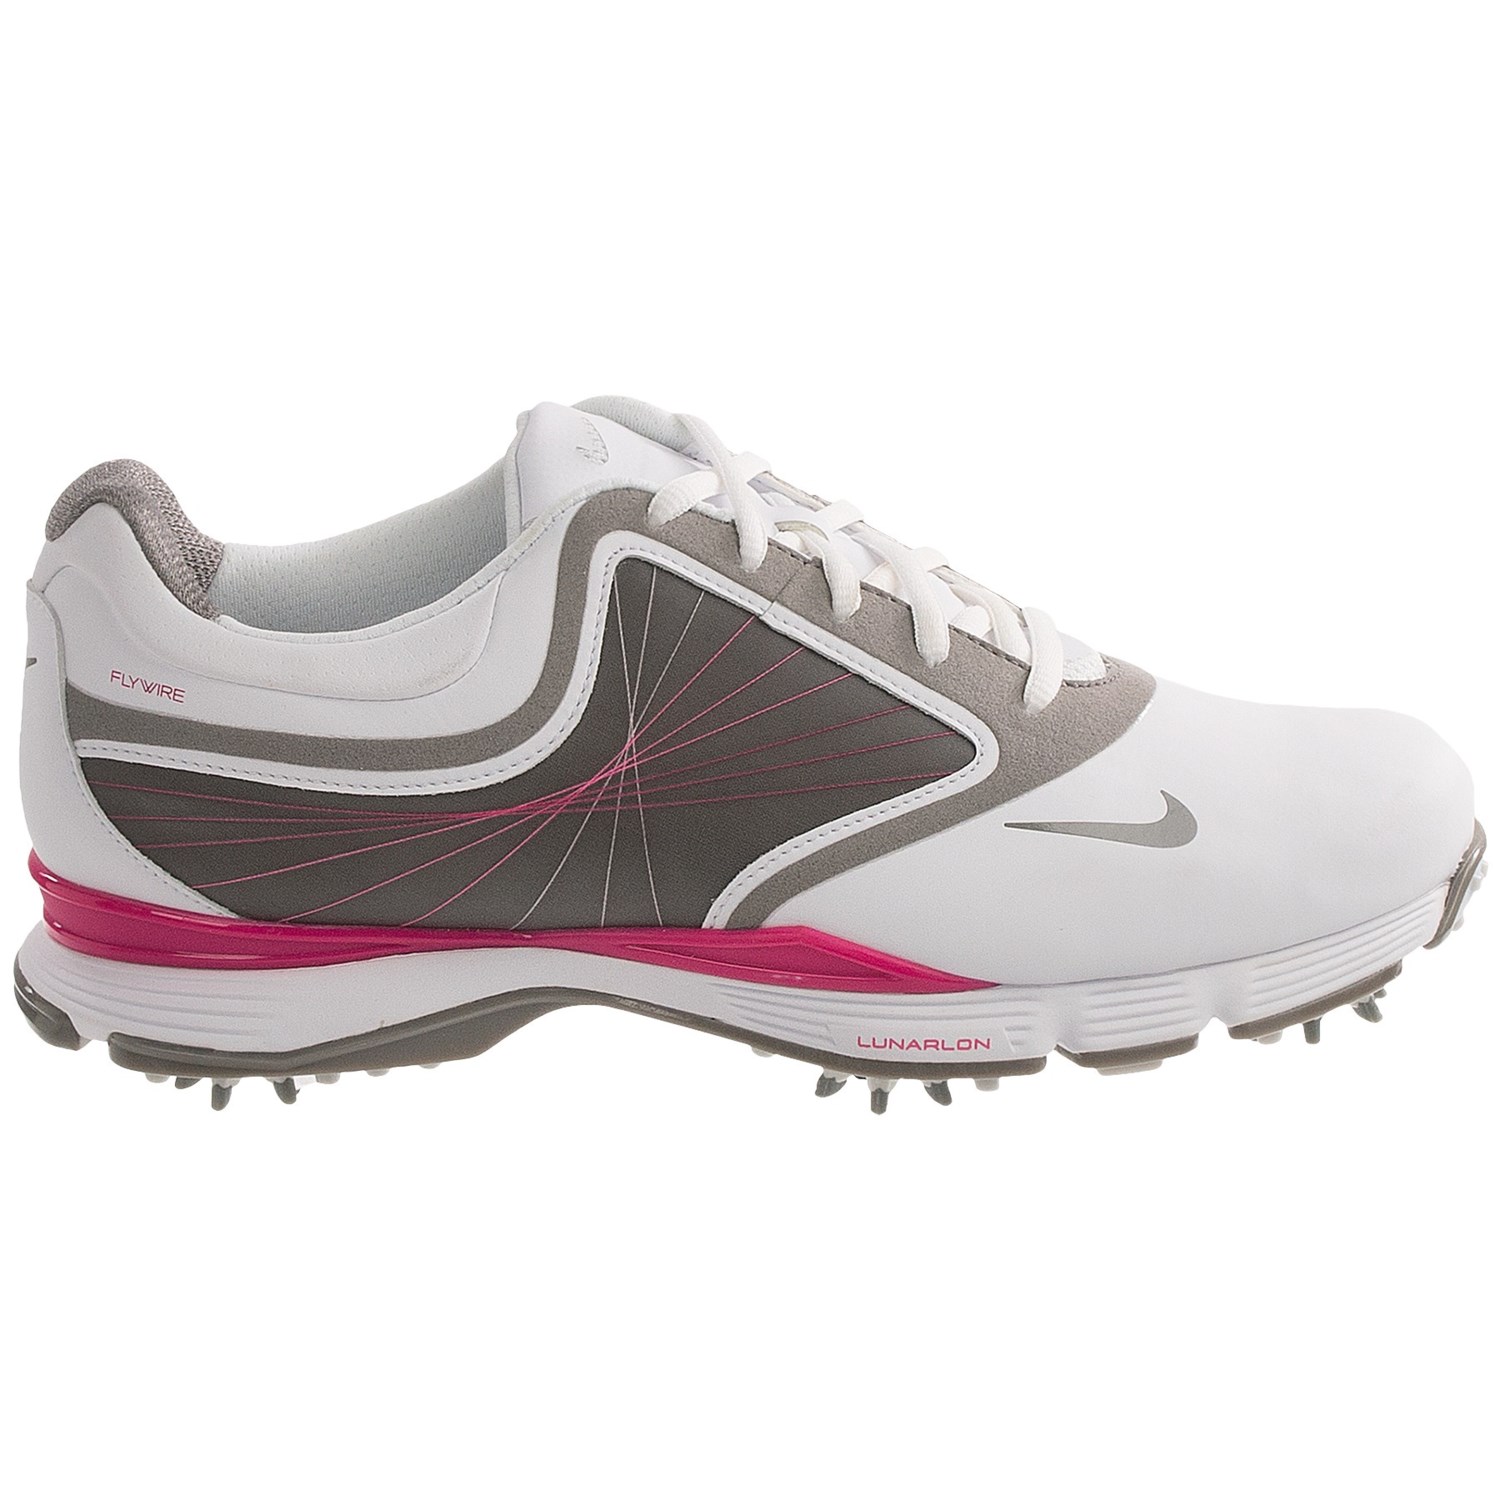 Nike Lunar Links III Golf Shoes (For Women) 8373C Save 47